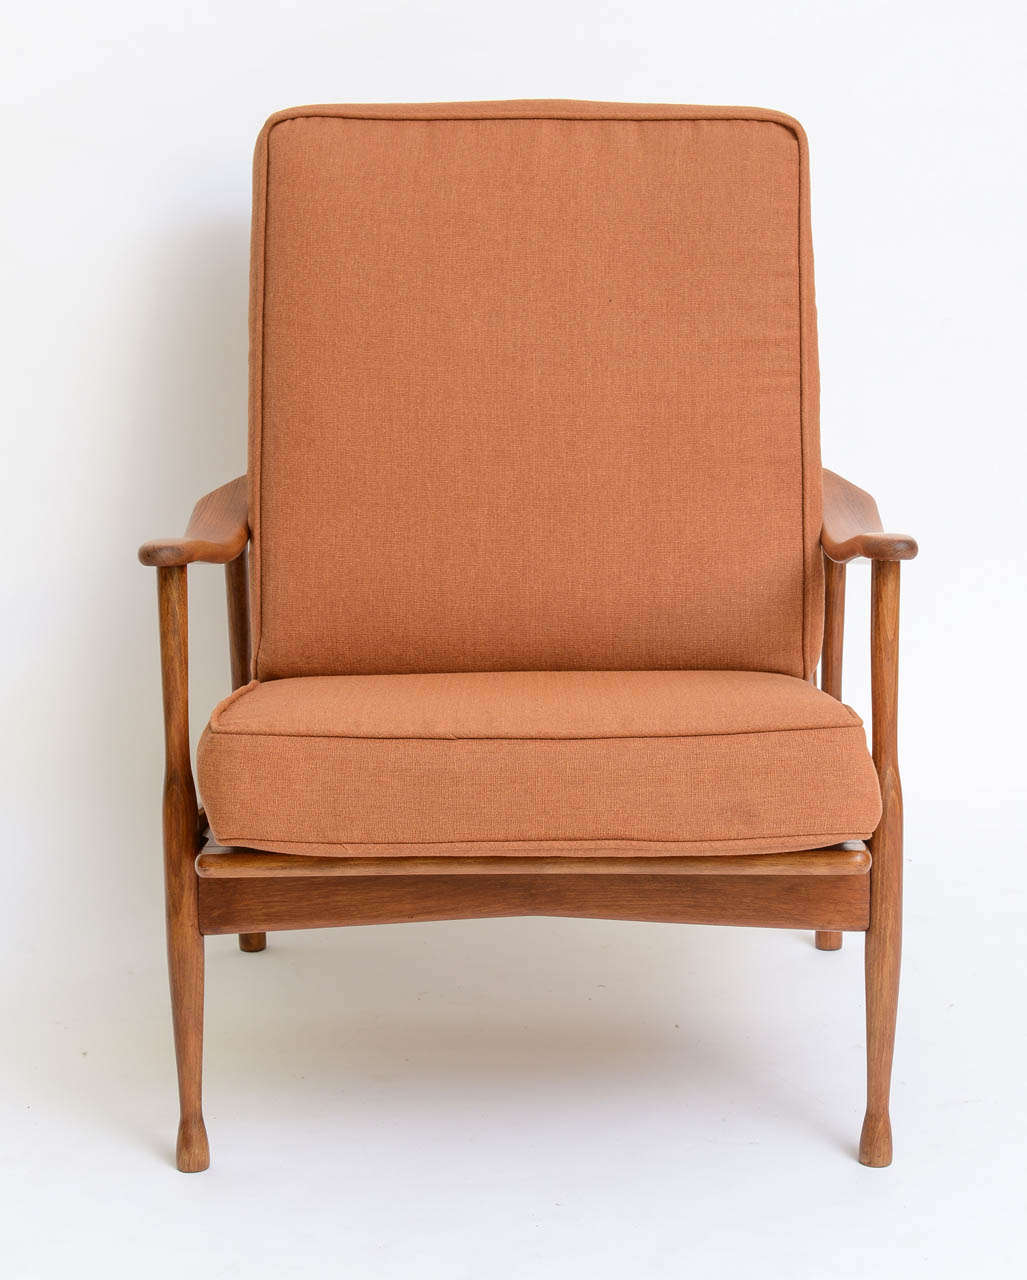 Mid-20th Century Danish Ib Kofod Larsen Style Teak Spindle Back Lounge Chair